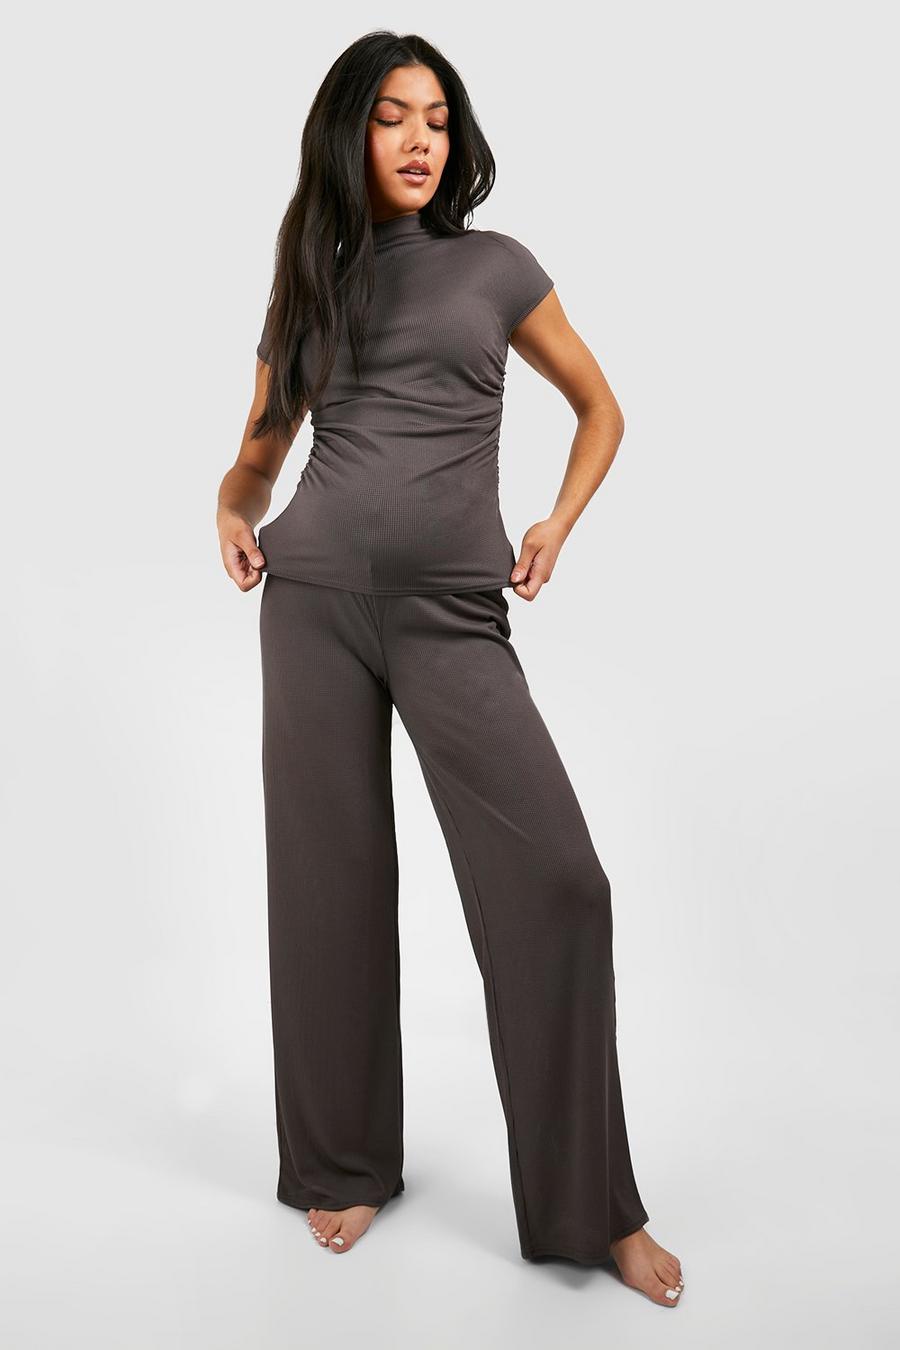 Charcoal Maternity Textured Loungewear Set